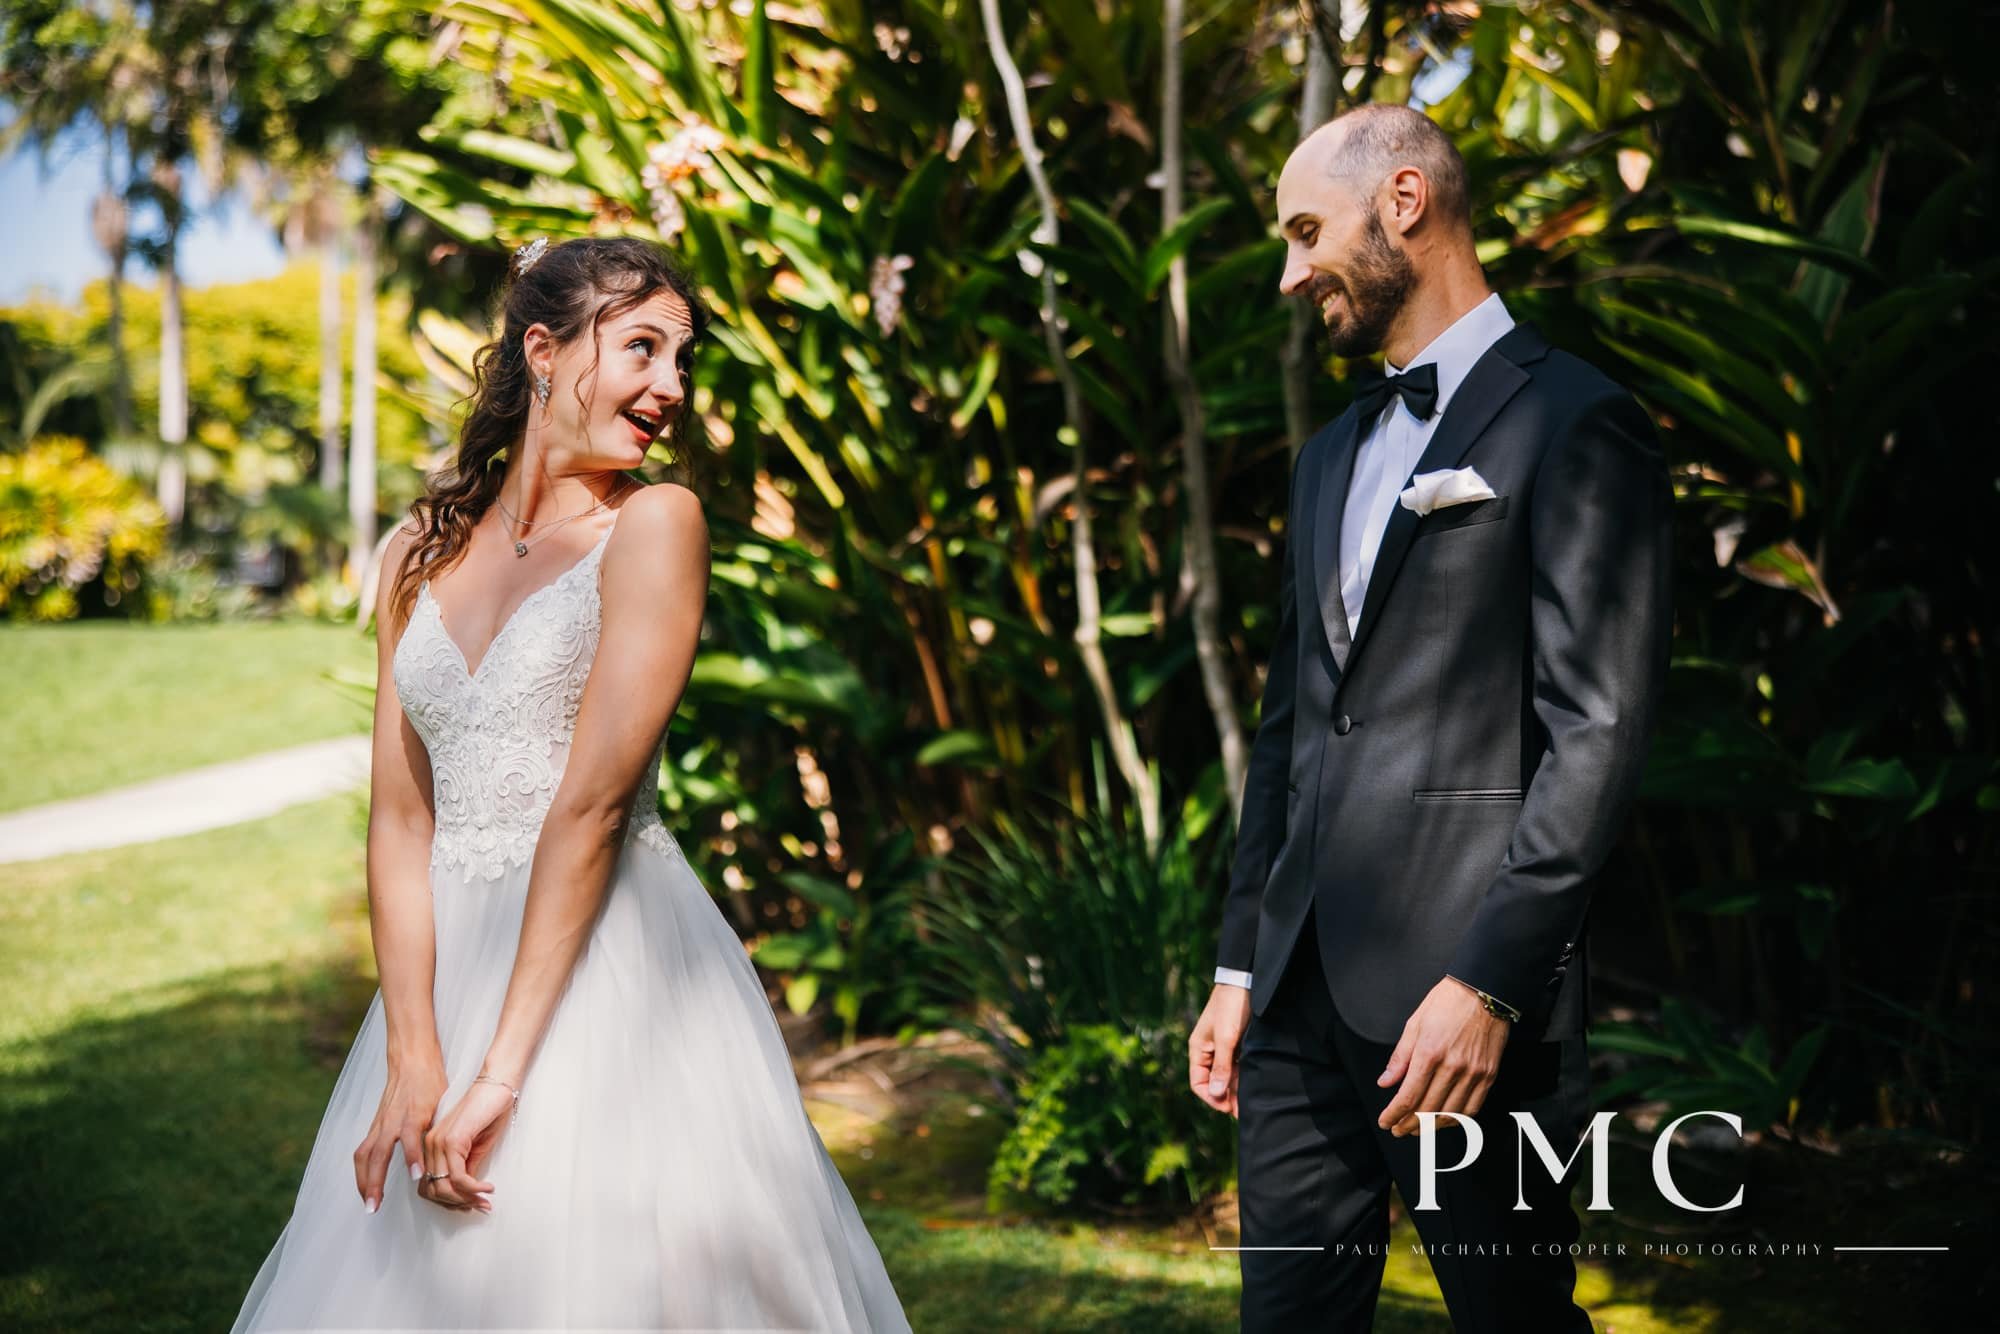 Paradise Point Resort & Spa - Summer Mission Bay Wedding - Best San Diego Wedding Photographer-13.jpg